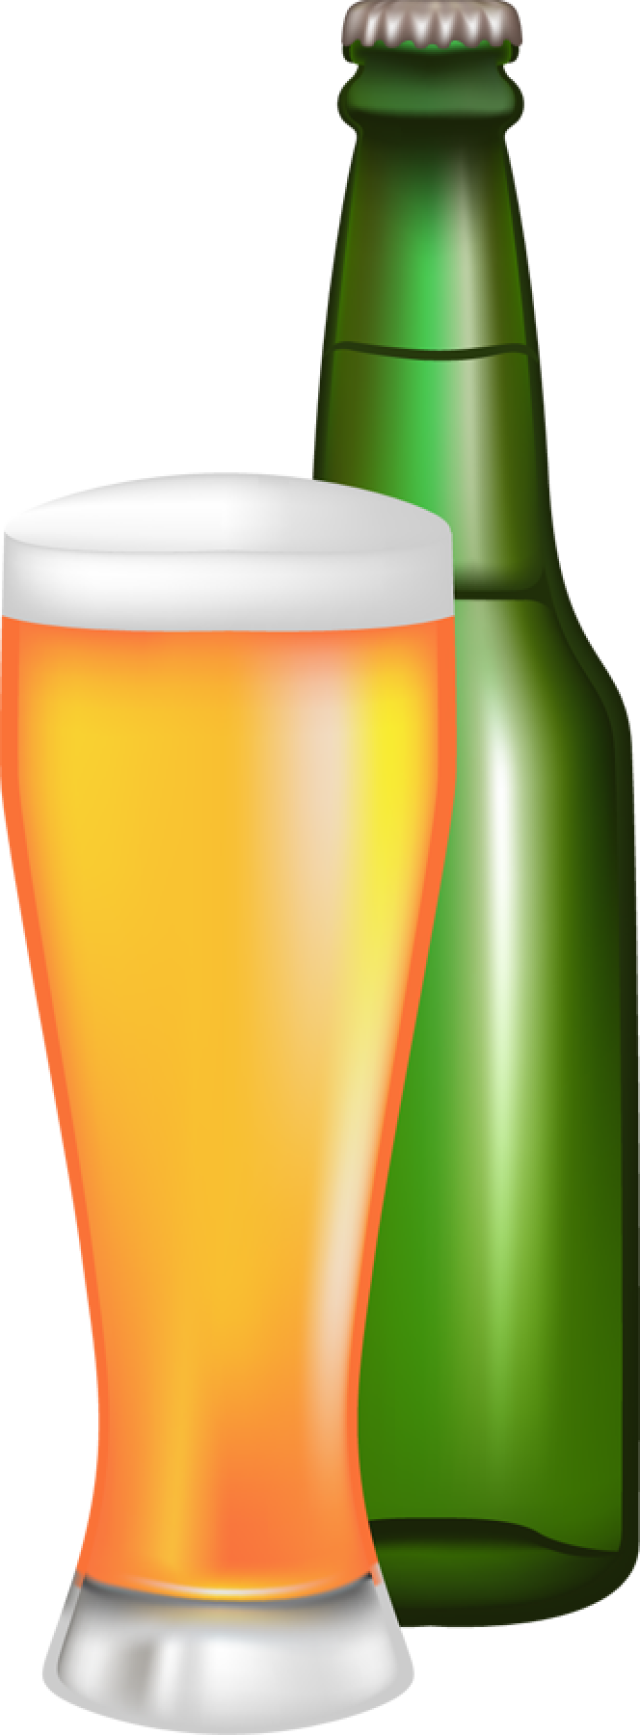 Beer Bottle Clip Art - Tumundografico